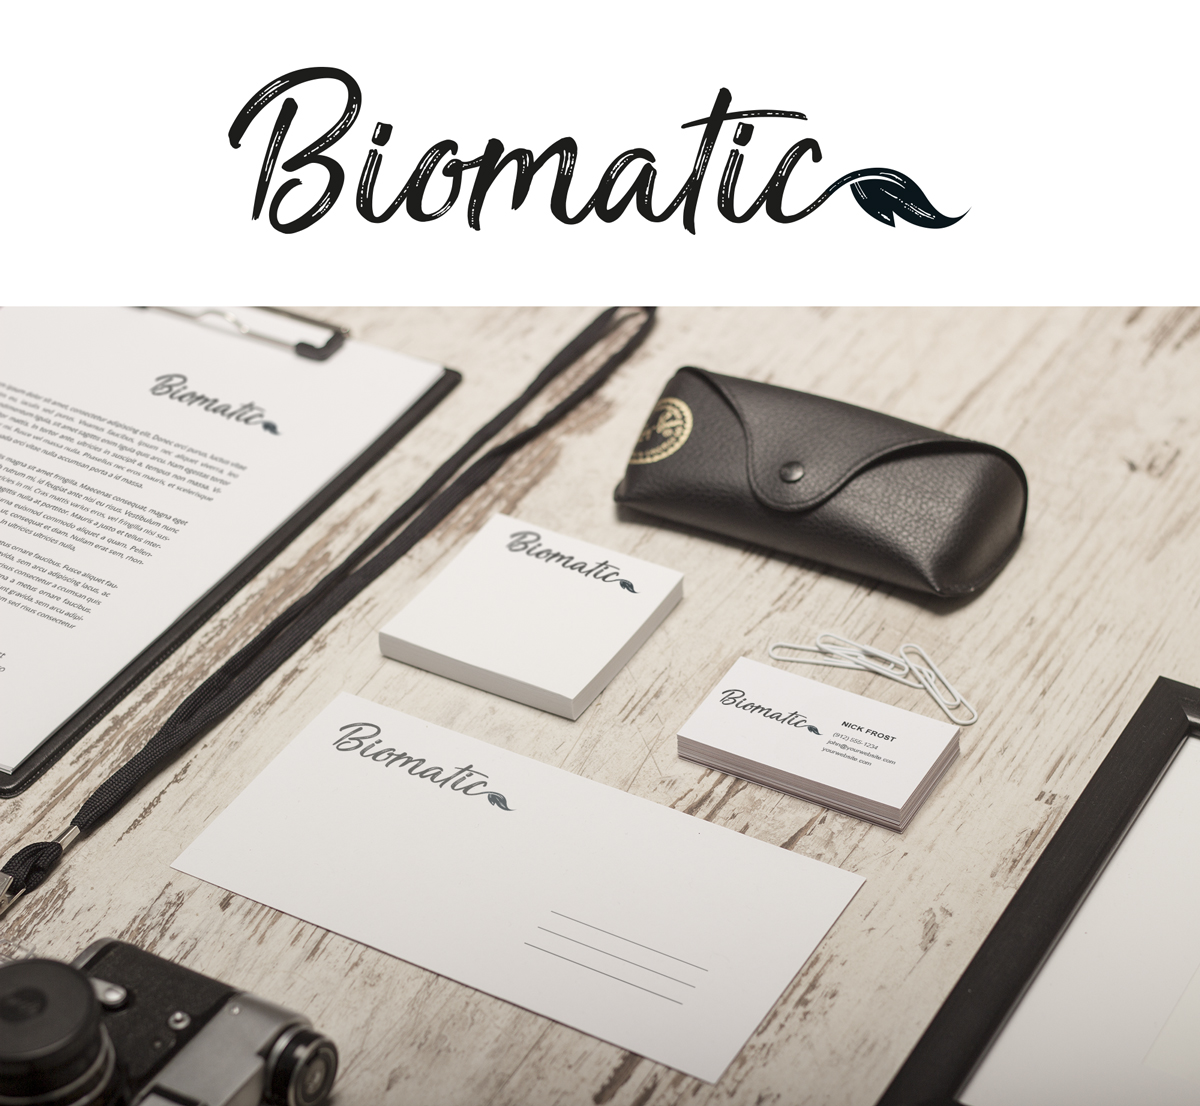 Biomatic